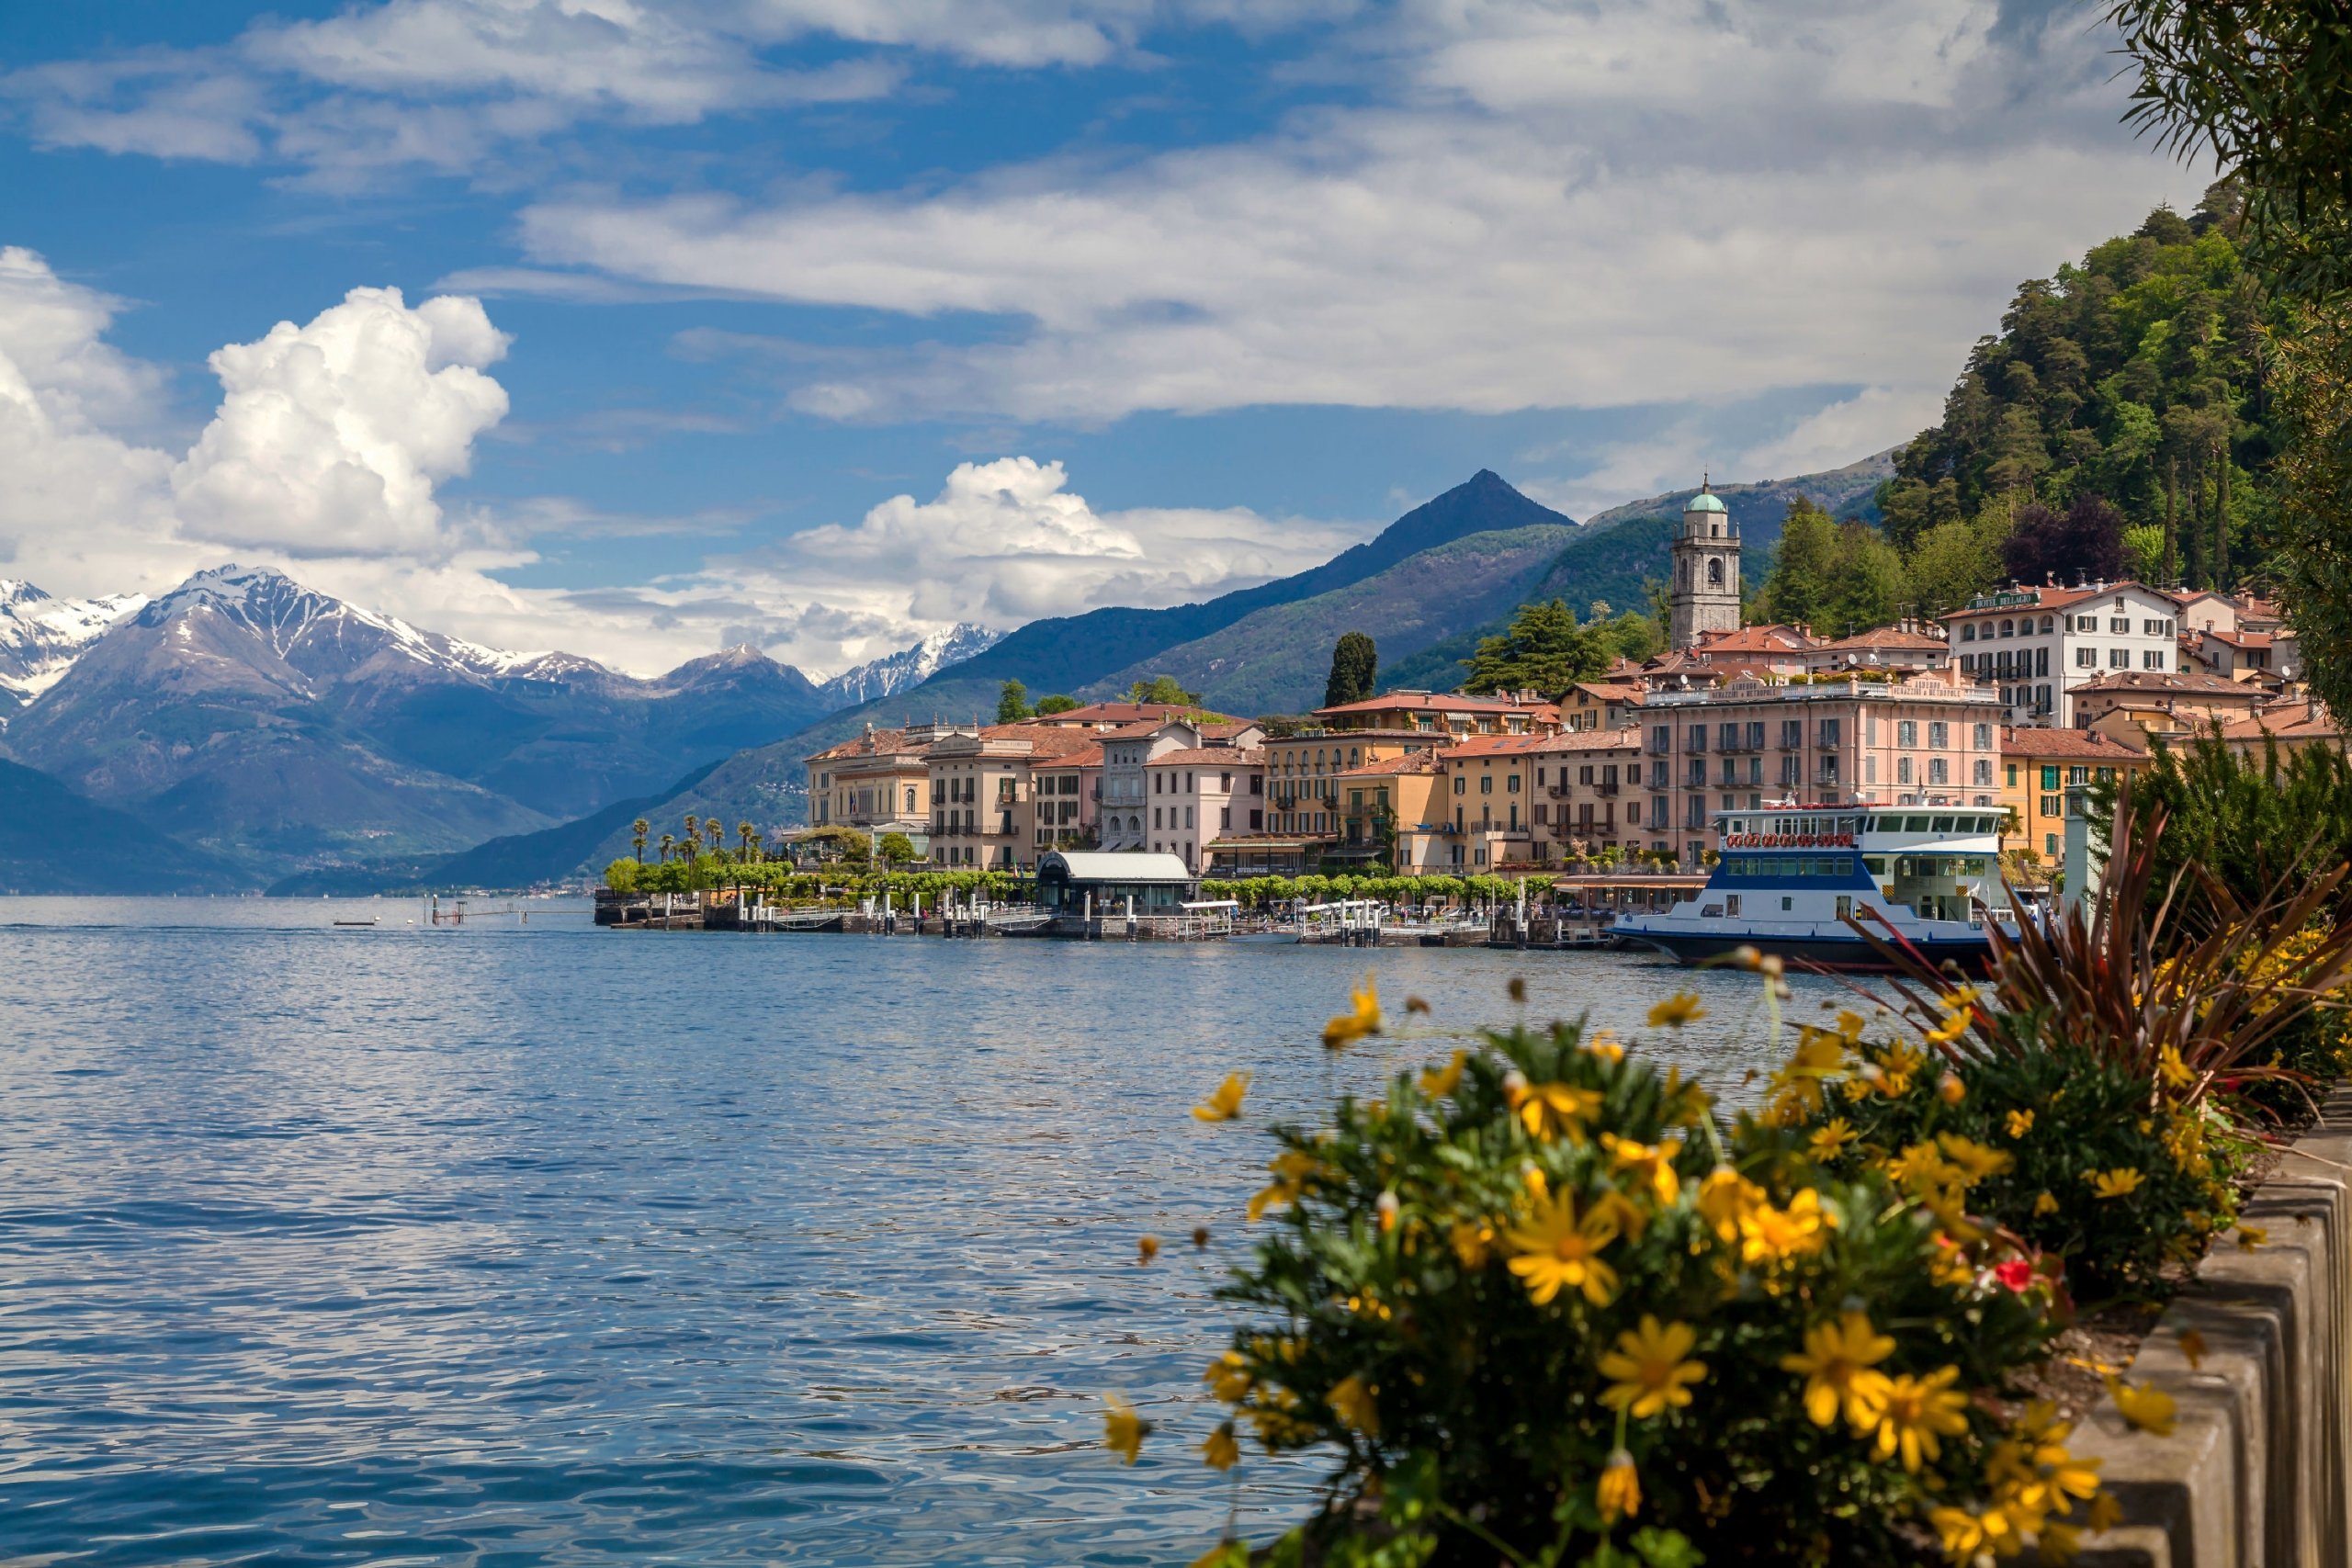 Italy: Lake Como & the Italian Lake District
